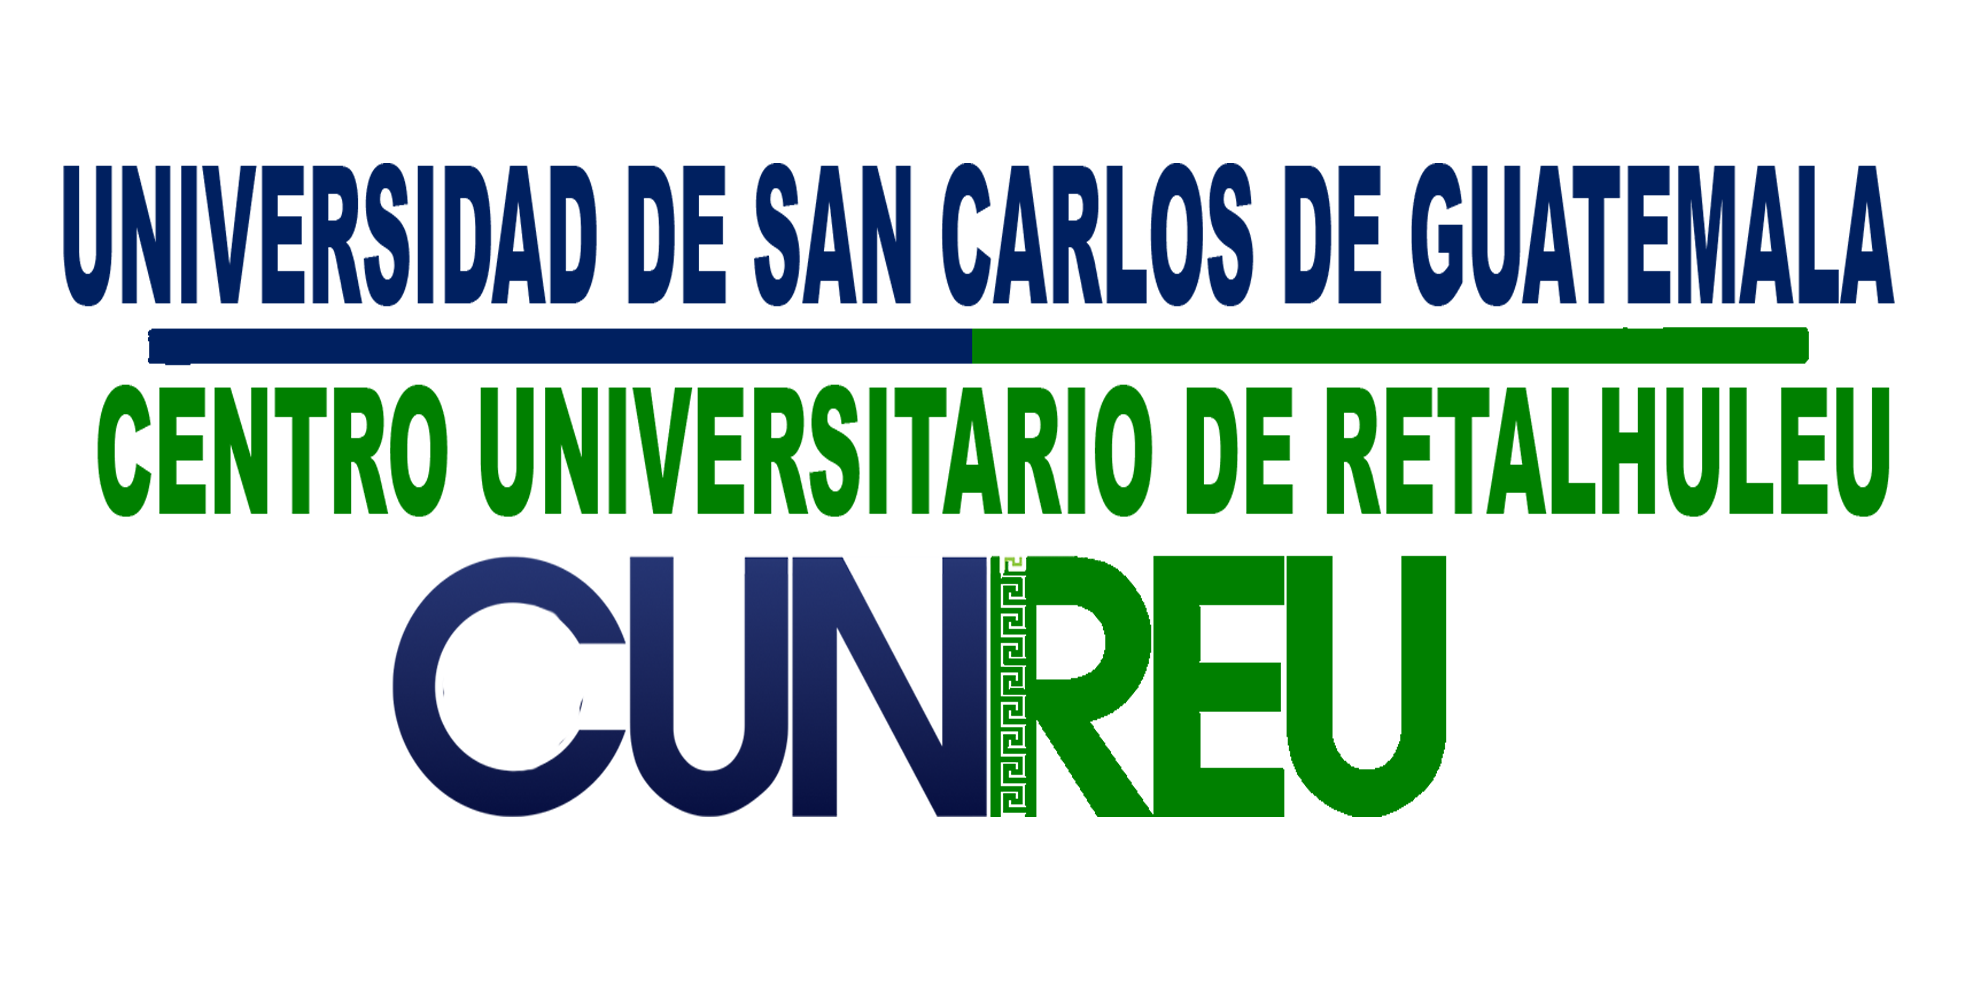 Centro Universitario de Retalhuleu -CUNREU-